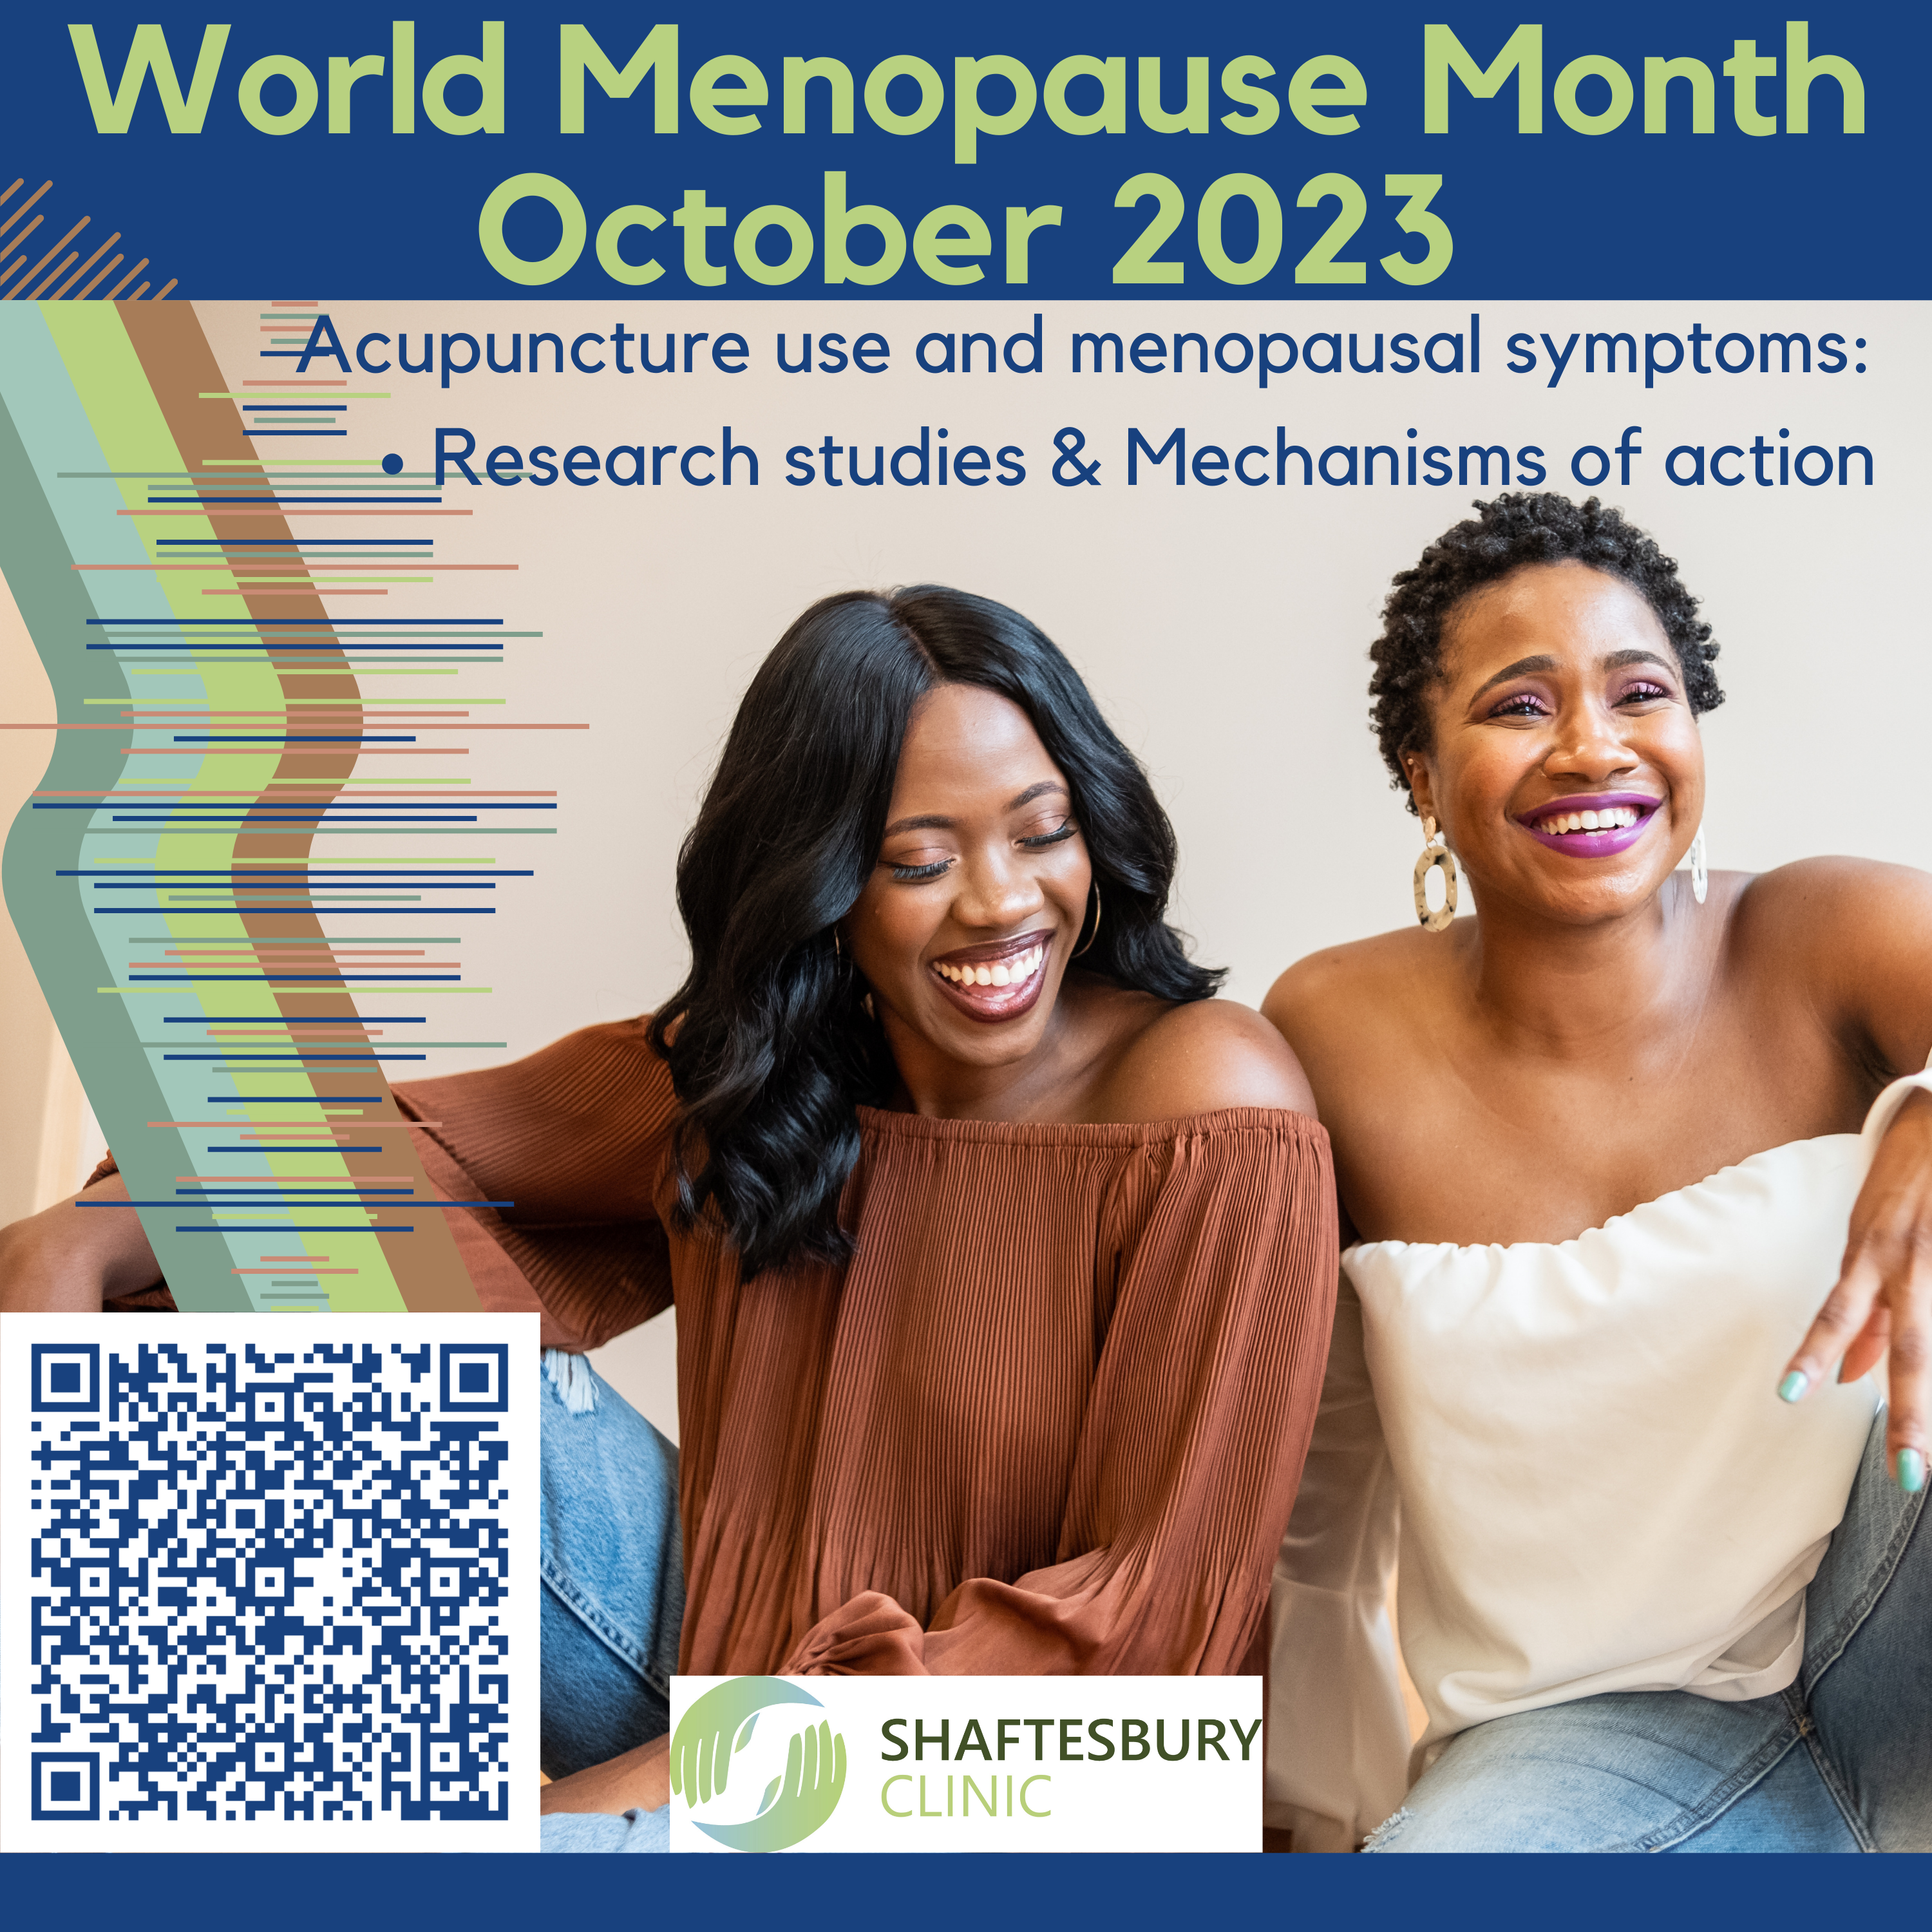 Shaftesbury Clinic Acupuncturist Bedford World Menopause Month